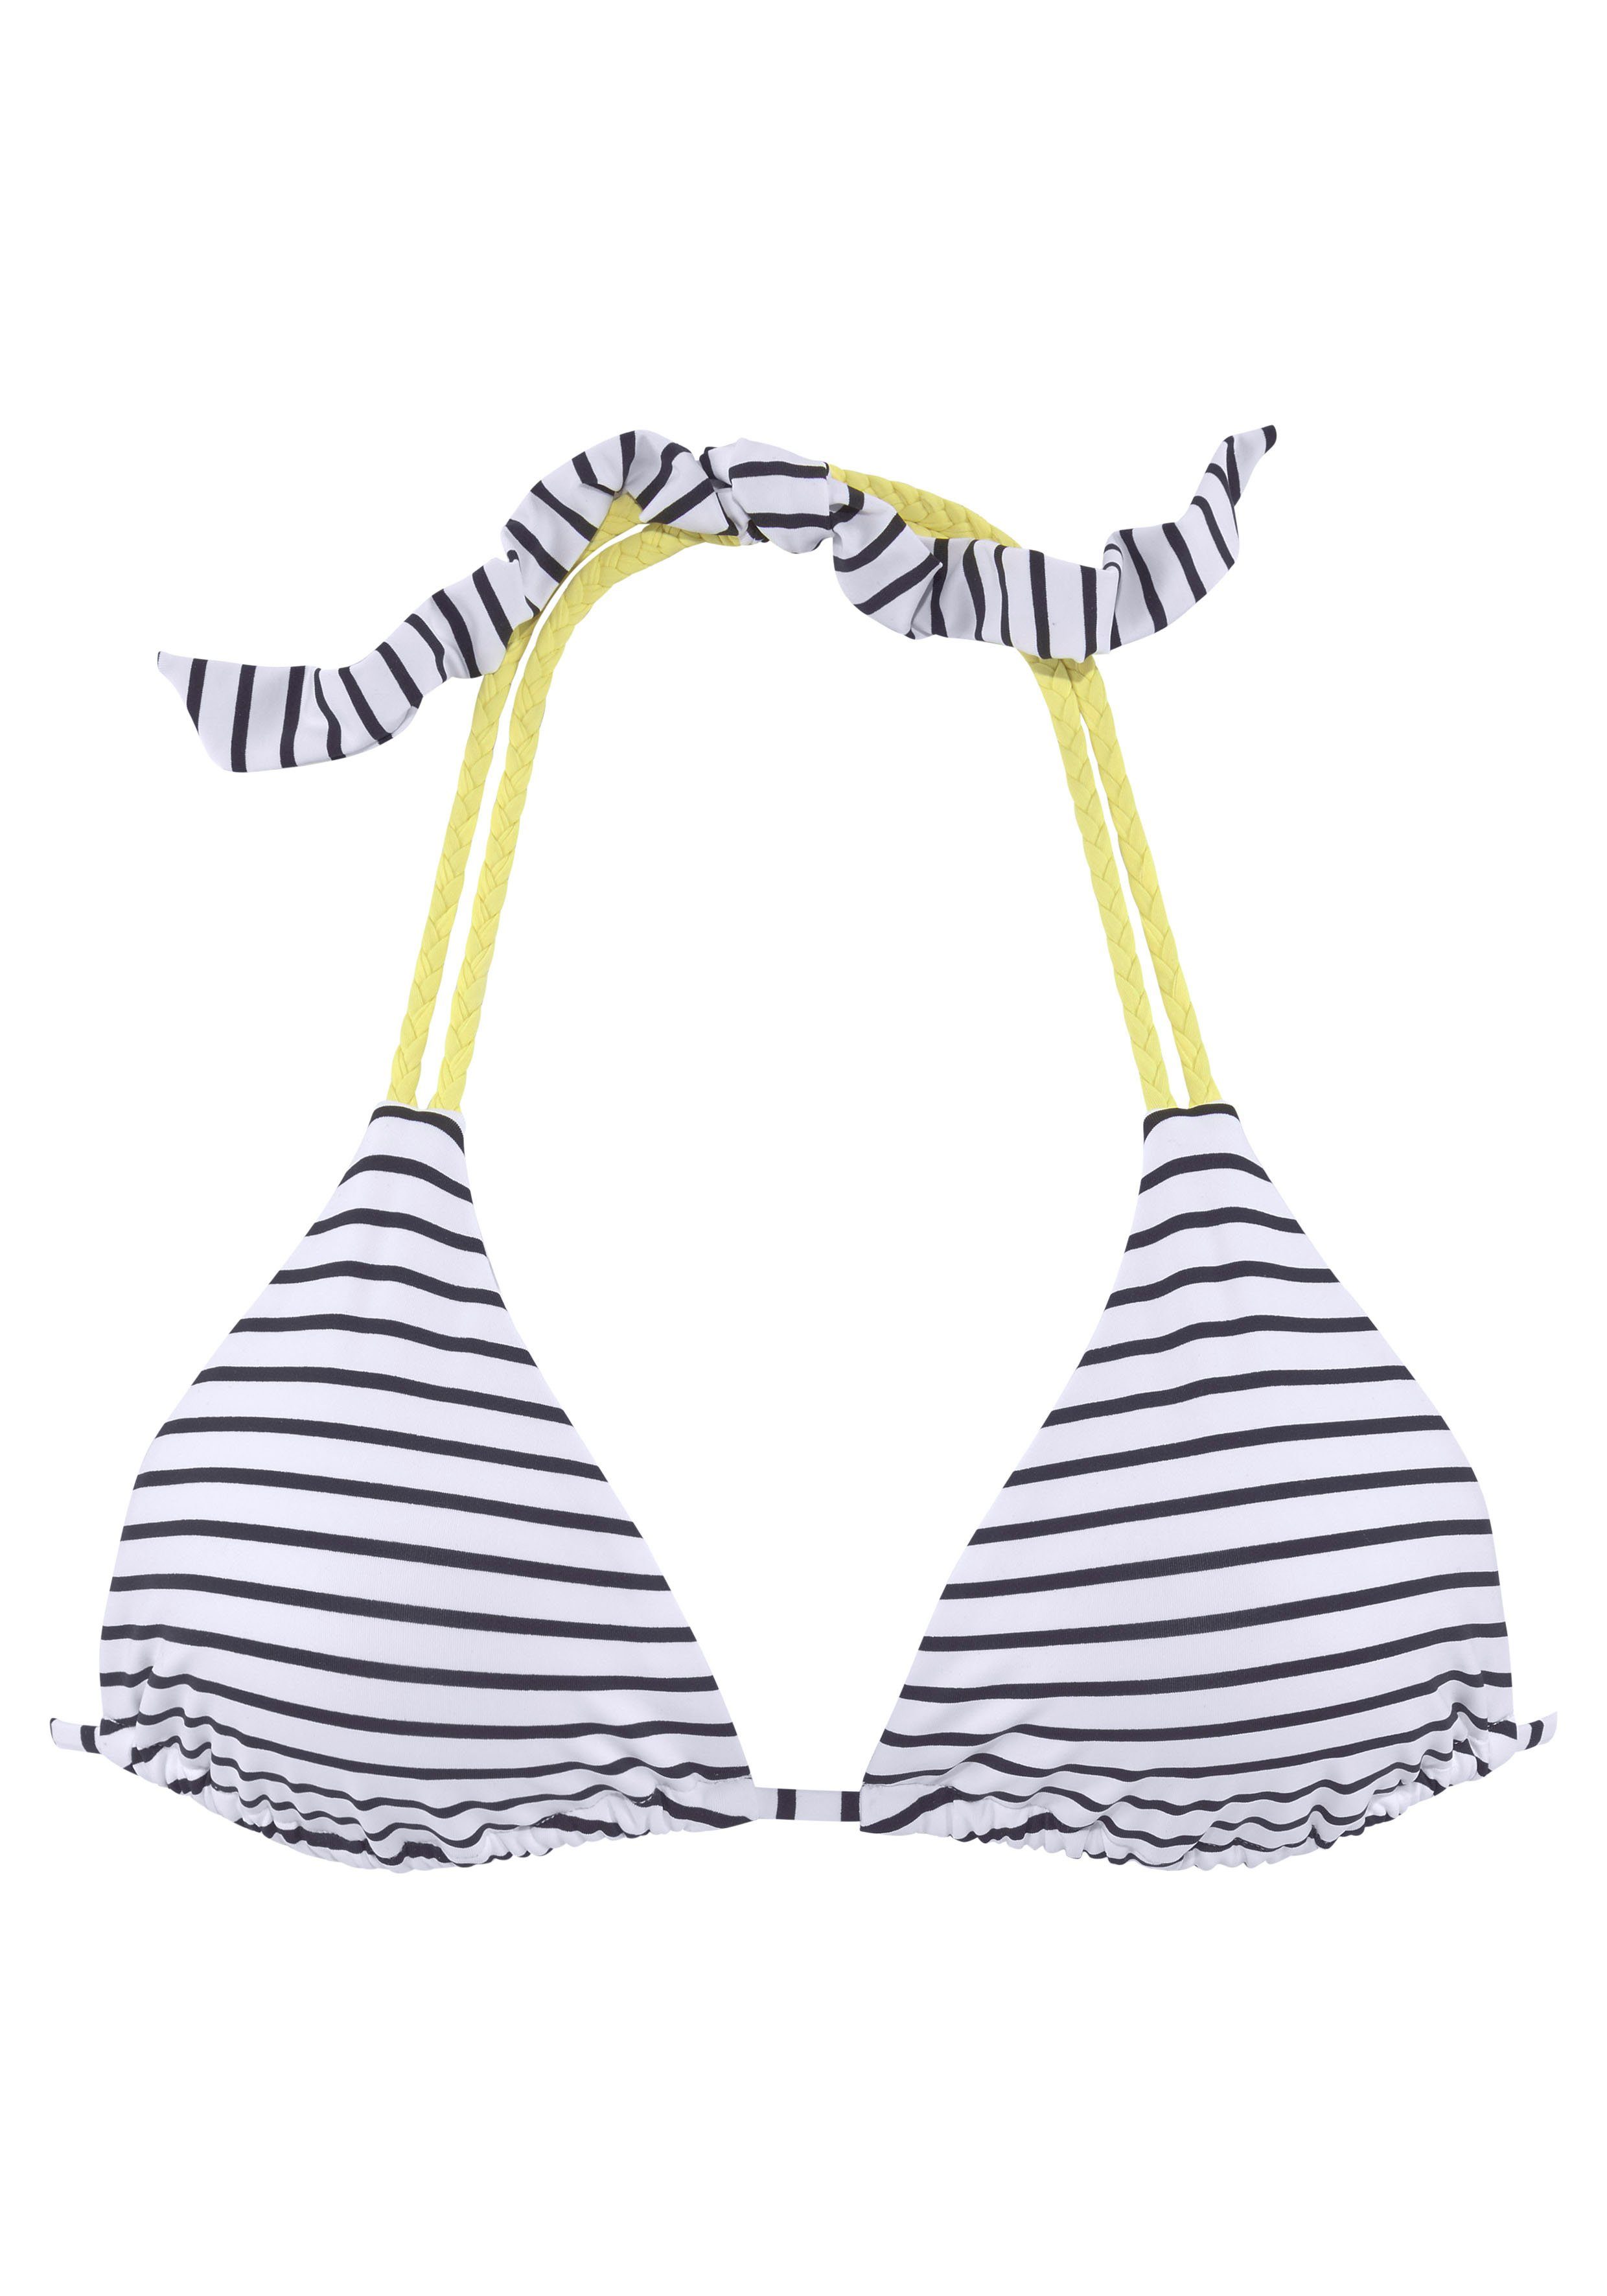 venice beach triangel-bikinitop camie met gevlochten details wit